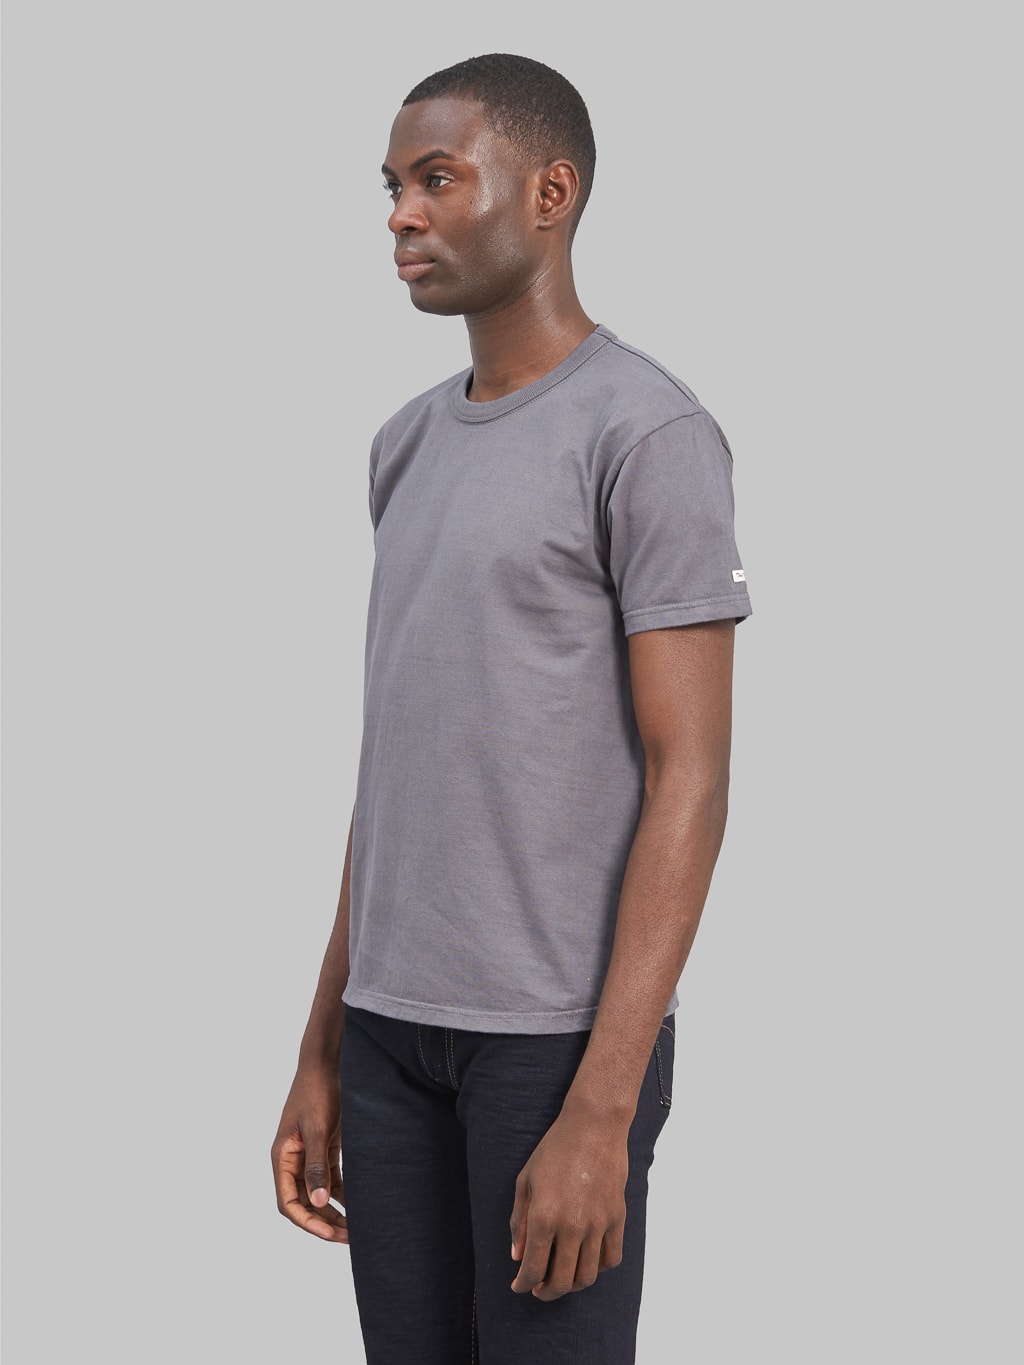 The Flat Head Loopwheeled Heavyweight Plain T-Shirt Charcoal